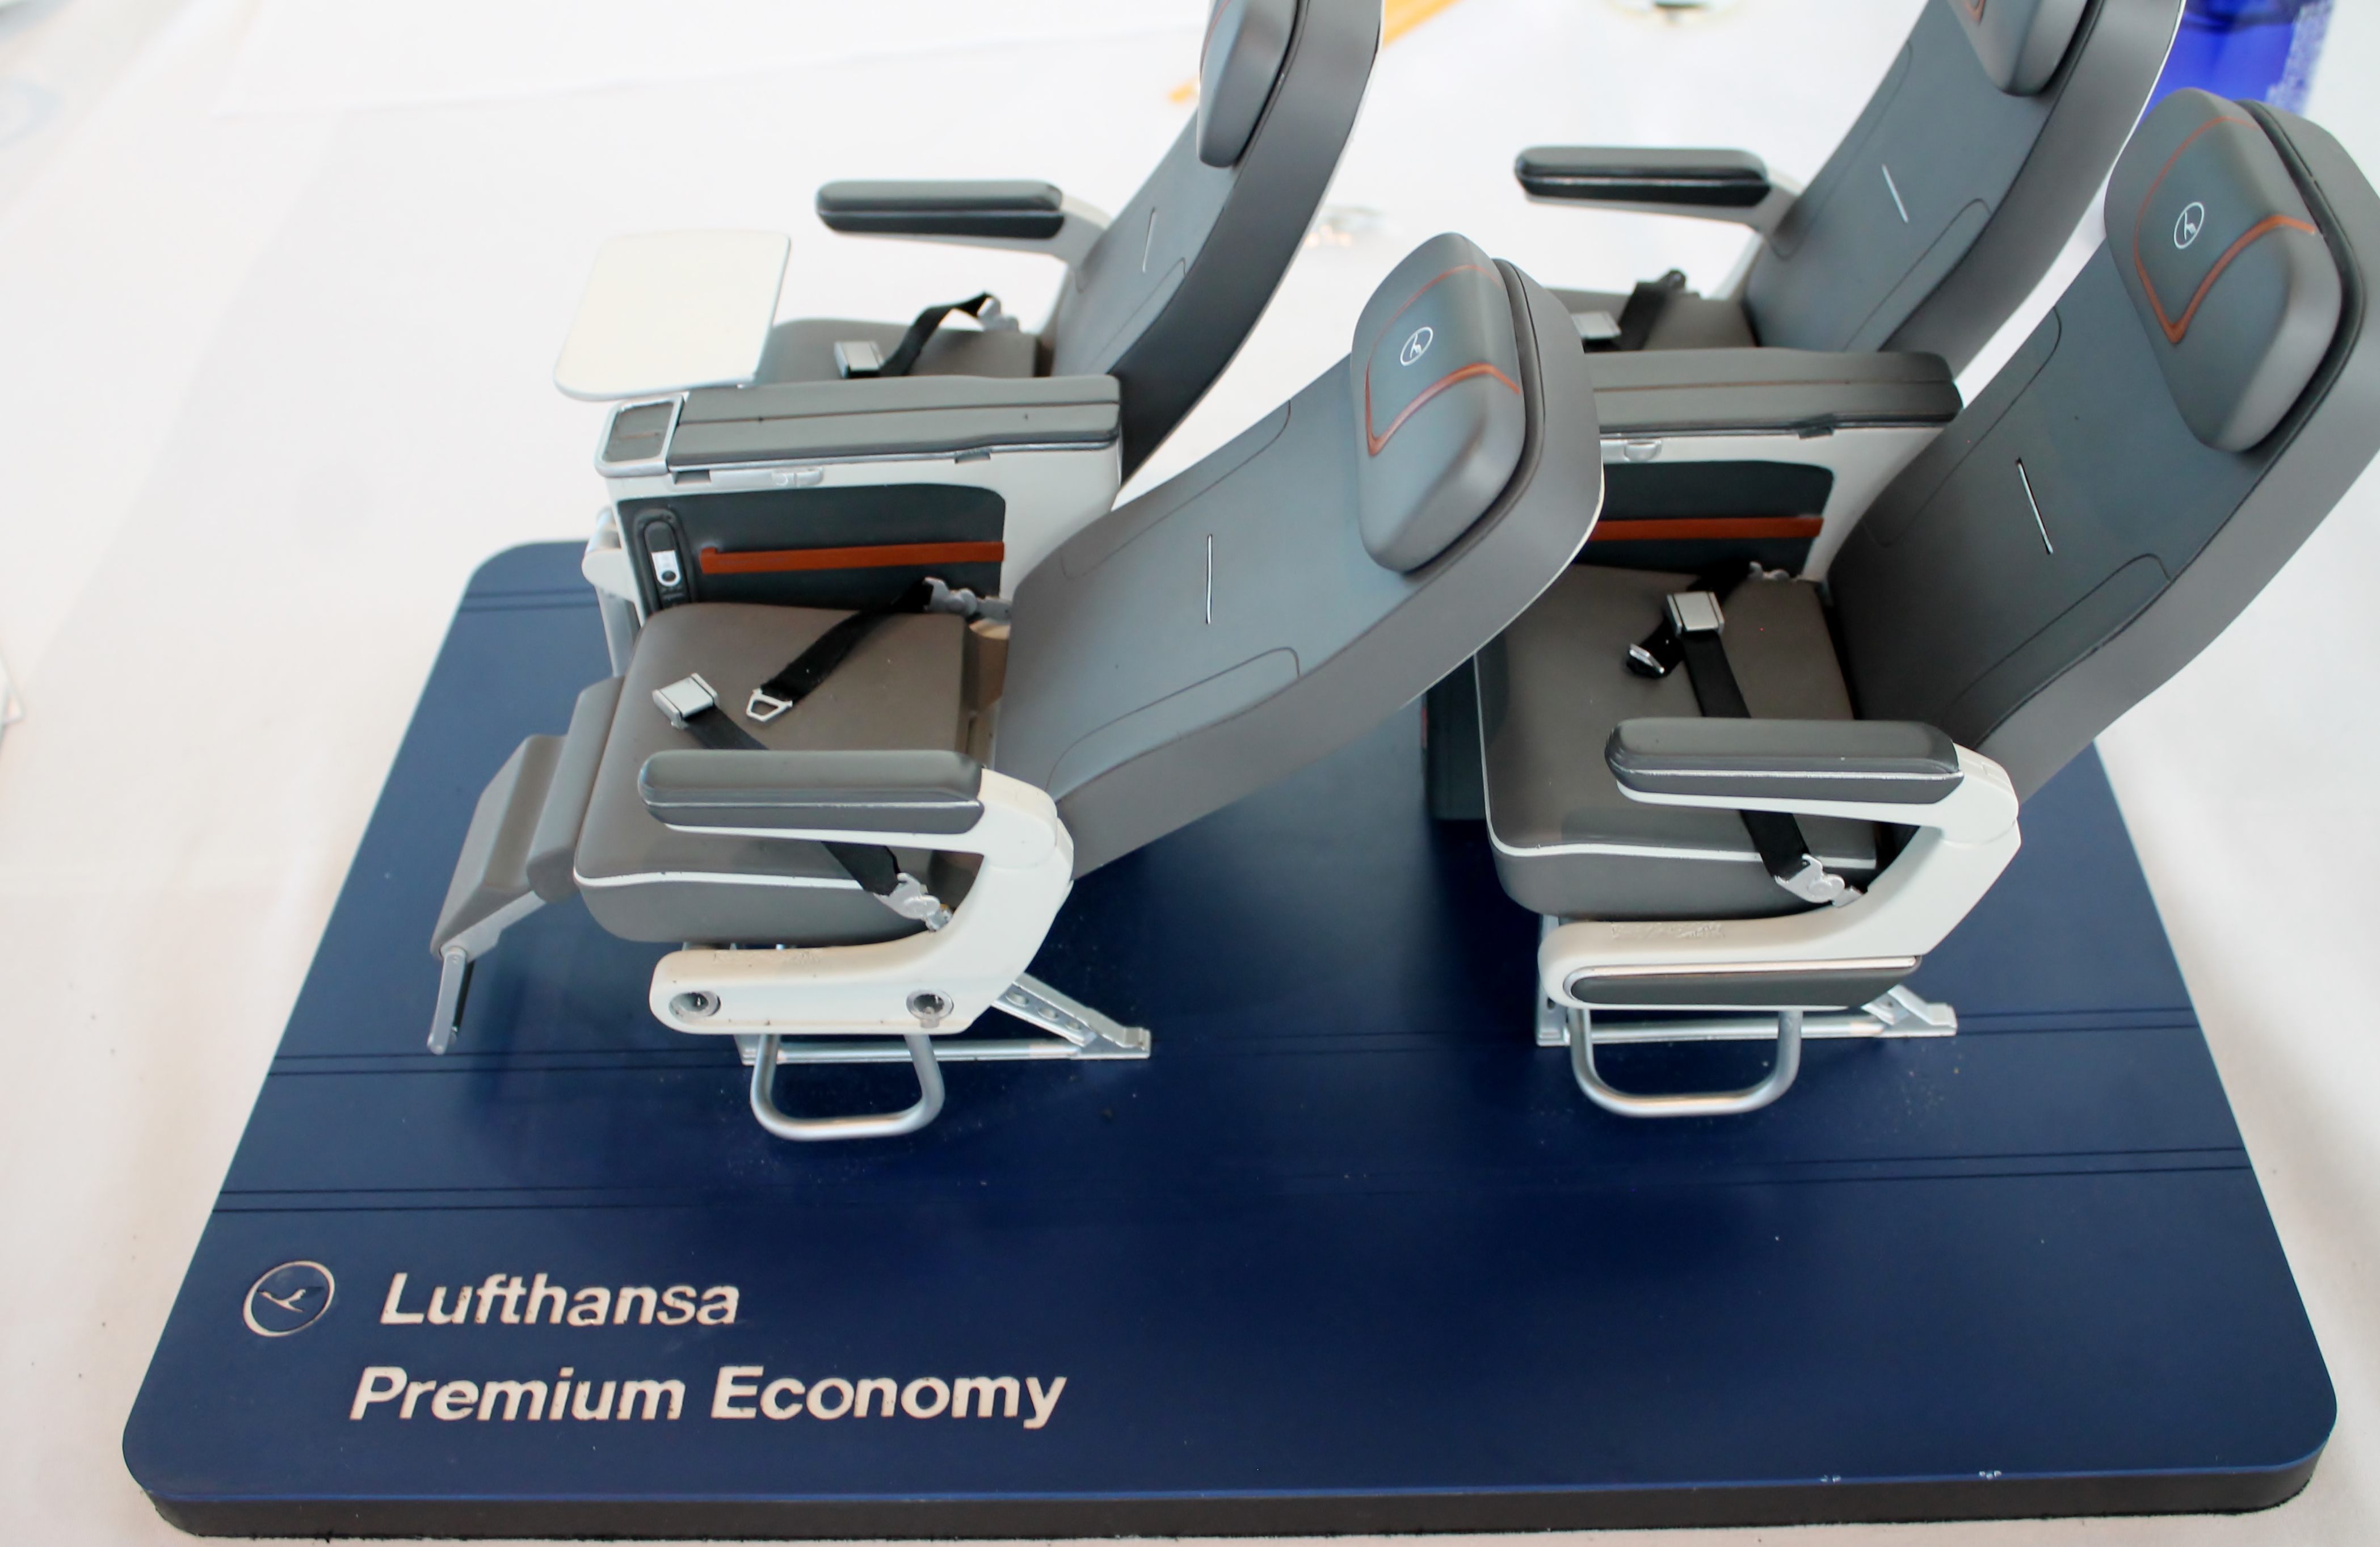 Lufthansa Premium Economy Class aboard an Airbus A380